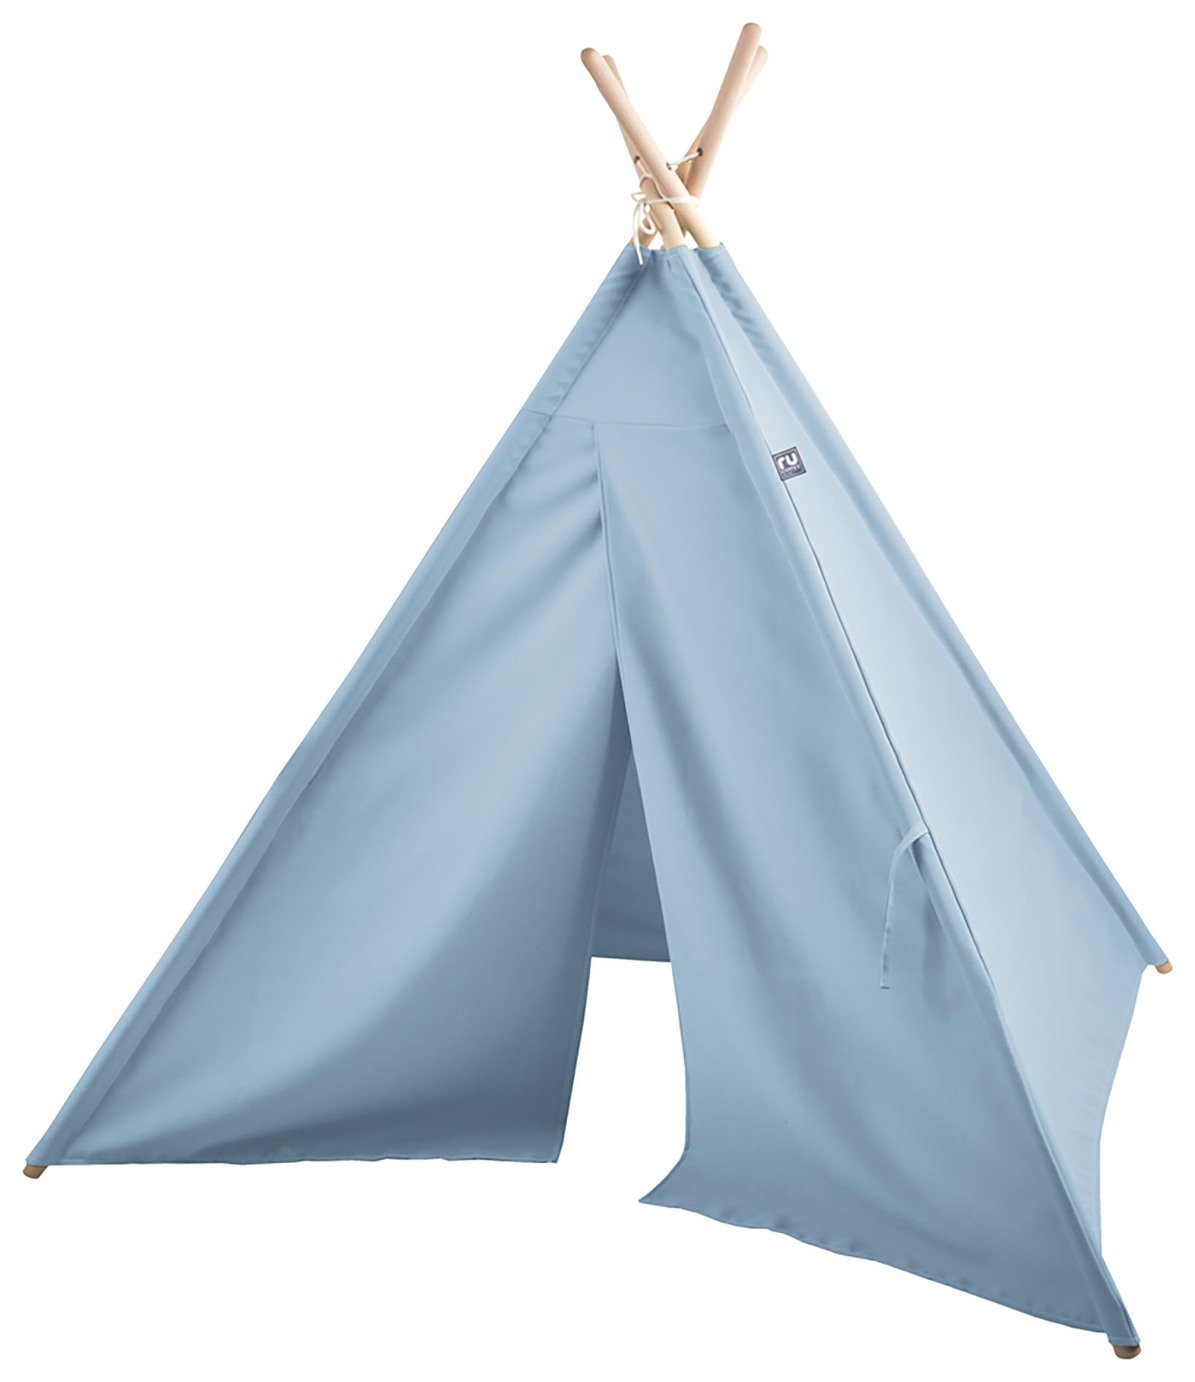 rucomfy Kids Trend Teepee Tent - Dusk Blue